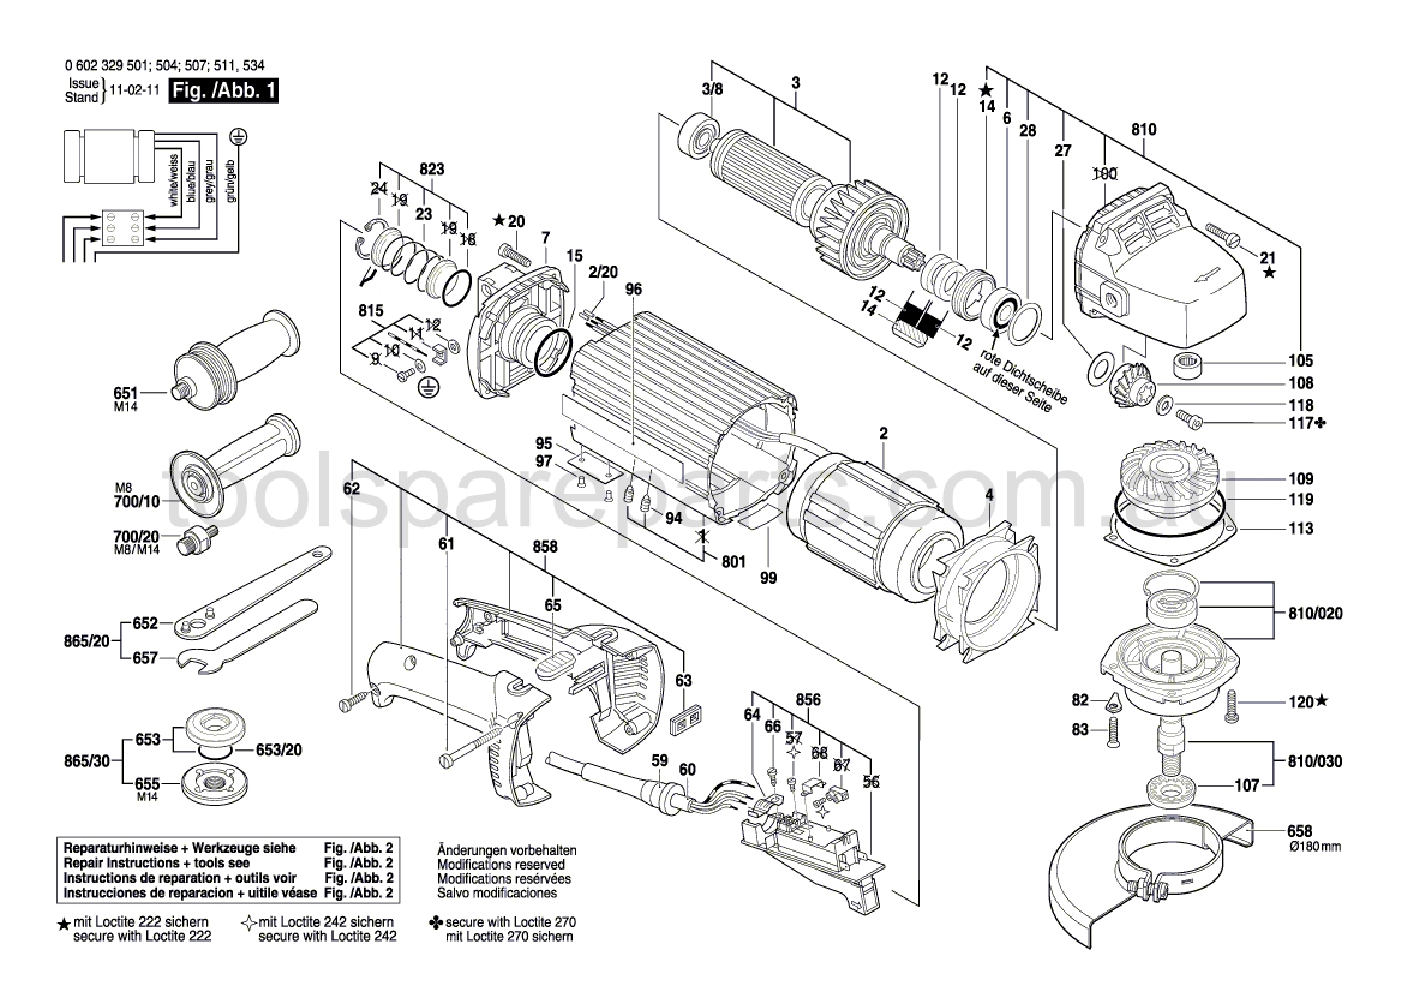 Bosch HWS 85/180 0602329511  Diagram 1